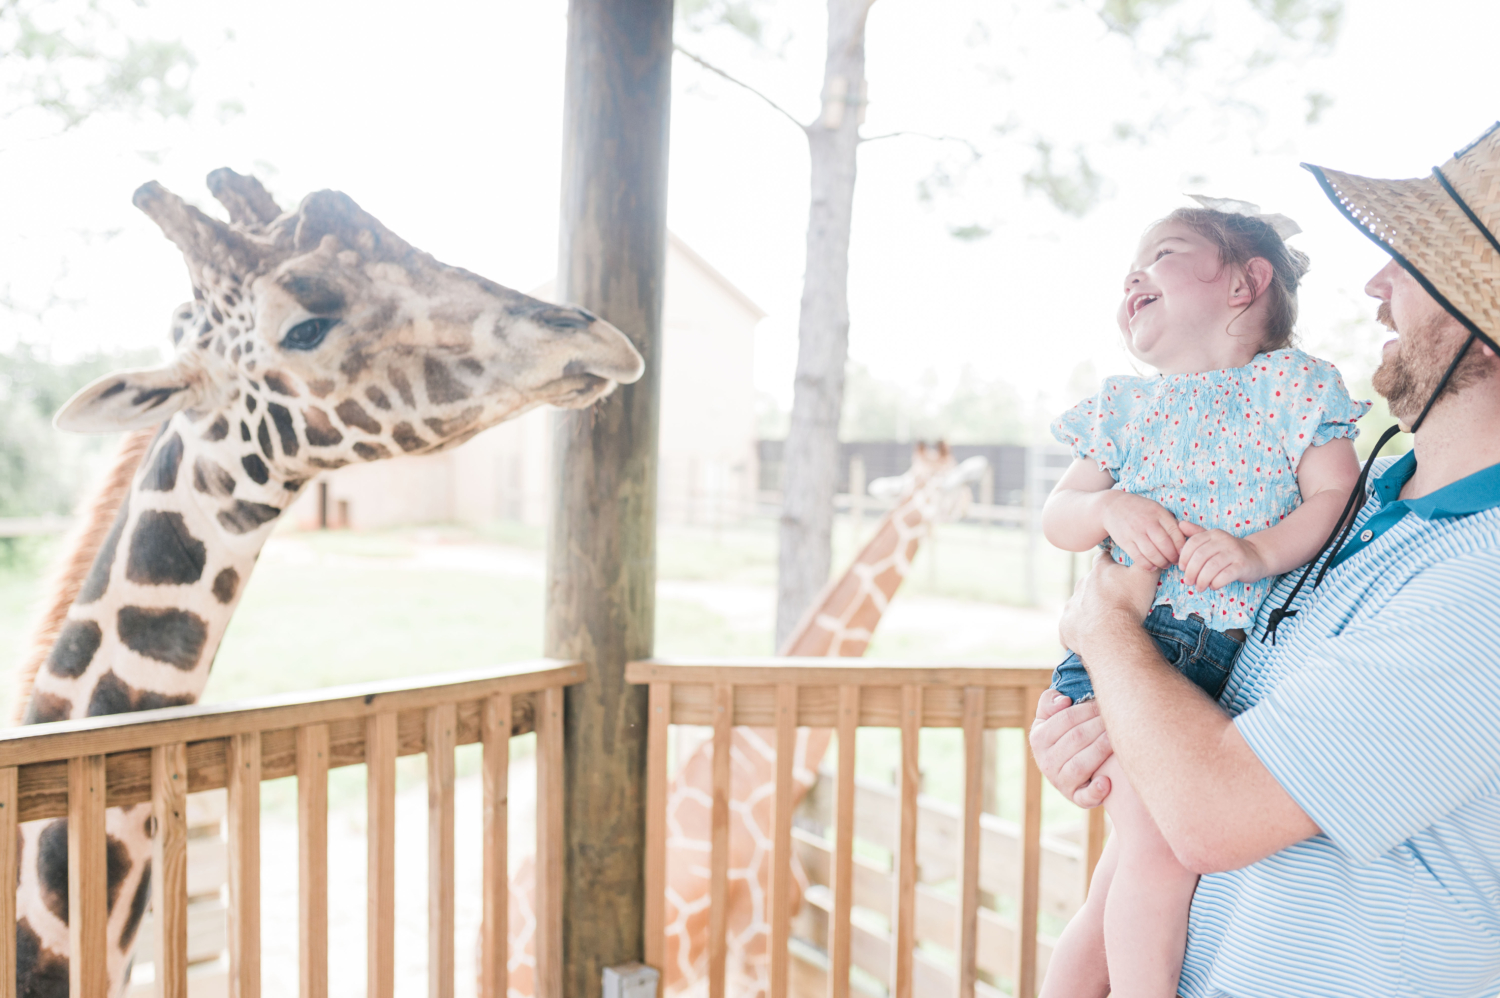 John Naylor holding daughter who is laughing while looking at a giraffe at the giraffe feeding at the Alabama Gulf Coast Zoo in Gulf Shores, Alabama--a backwards beach day activity